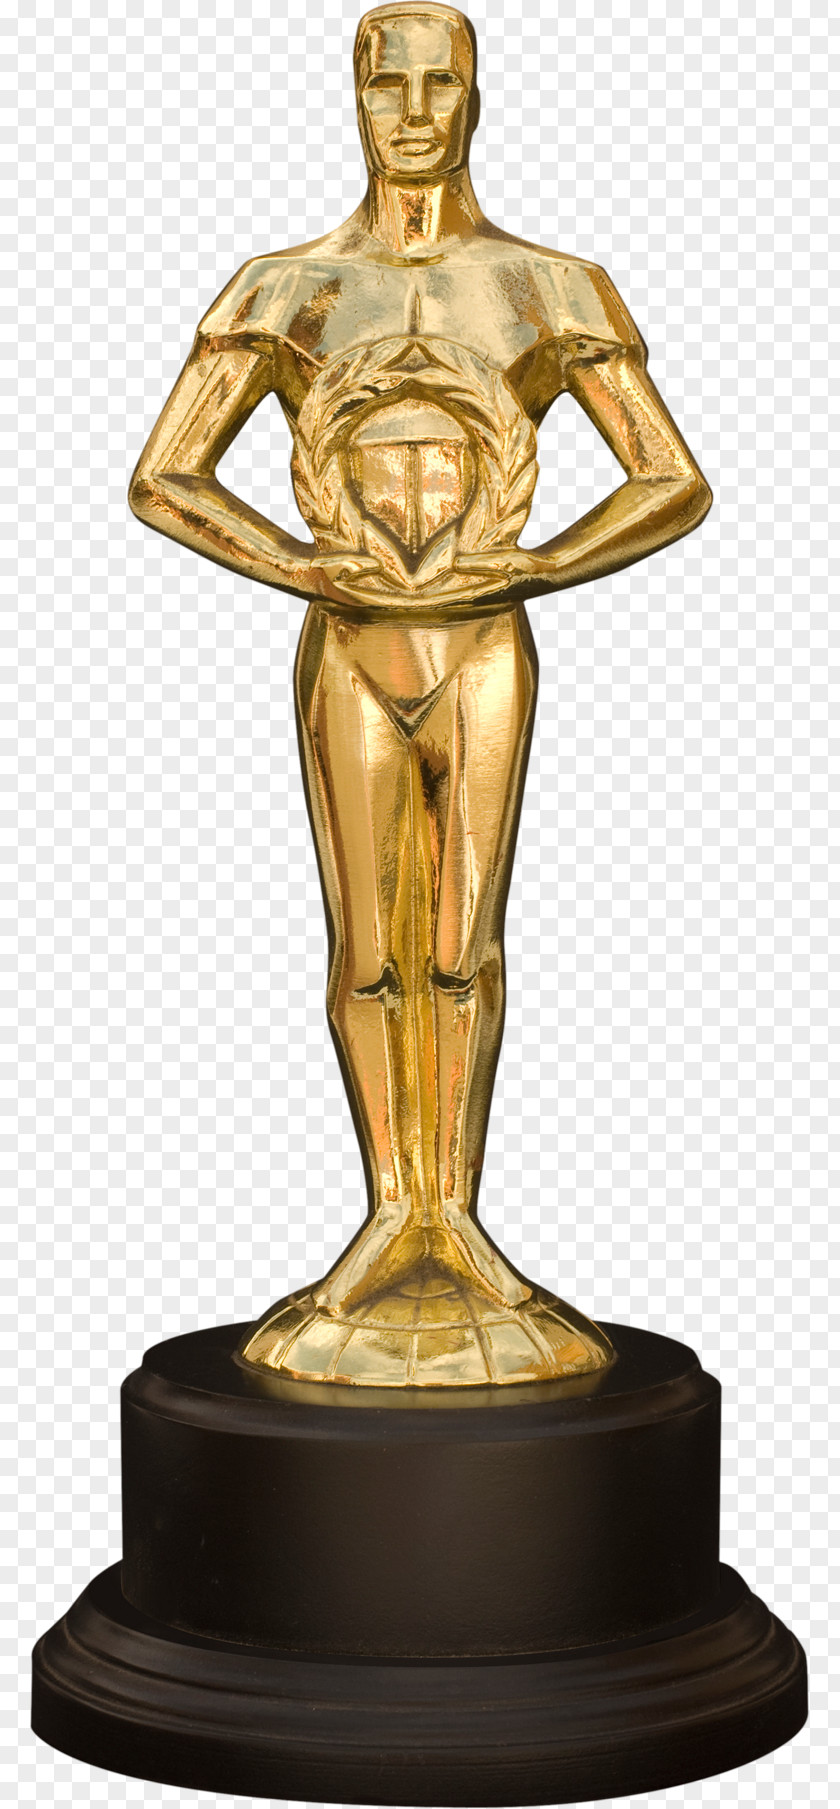 Academy Awards U0420u043eu0441u0442u043eu0432u0430 U0444u0456u0433u0443u0440u0430 PNG u0420u043eu0441u0442u043eu0432u0430 u0444u0456u0433u0443u0440u0430, Oscar Awards, gold trophy illustration clipart PNG